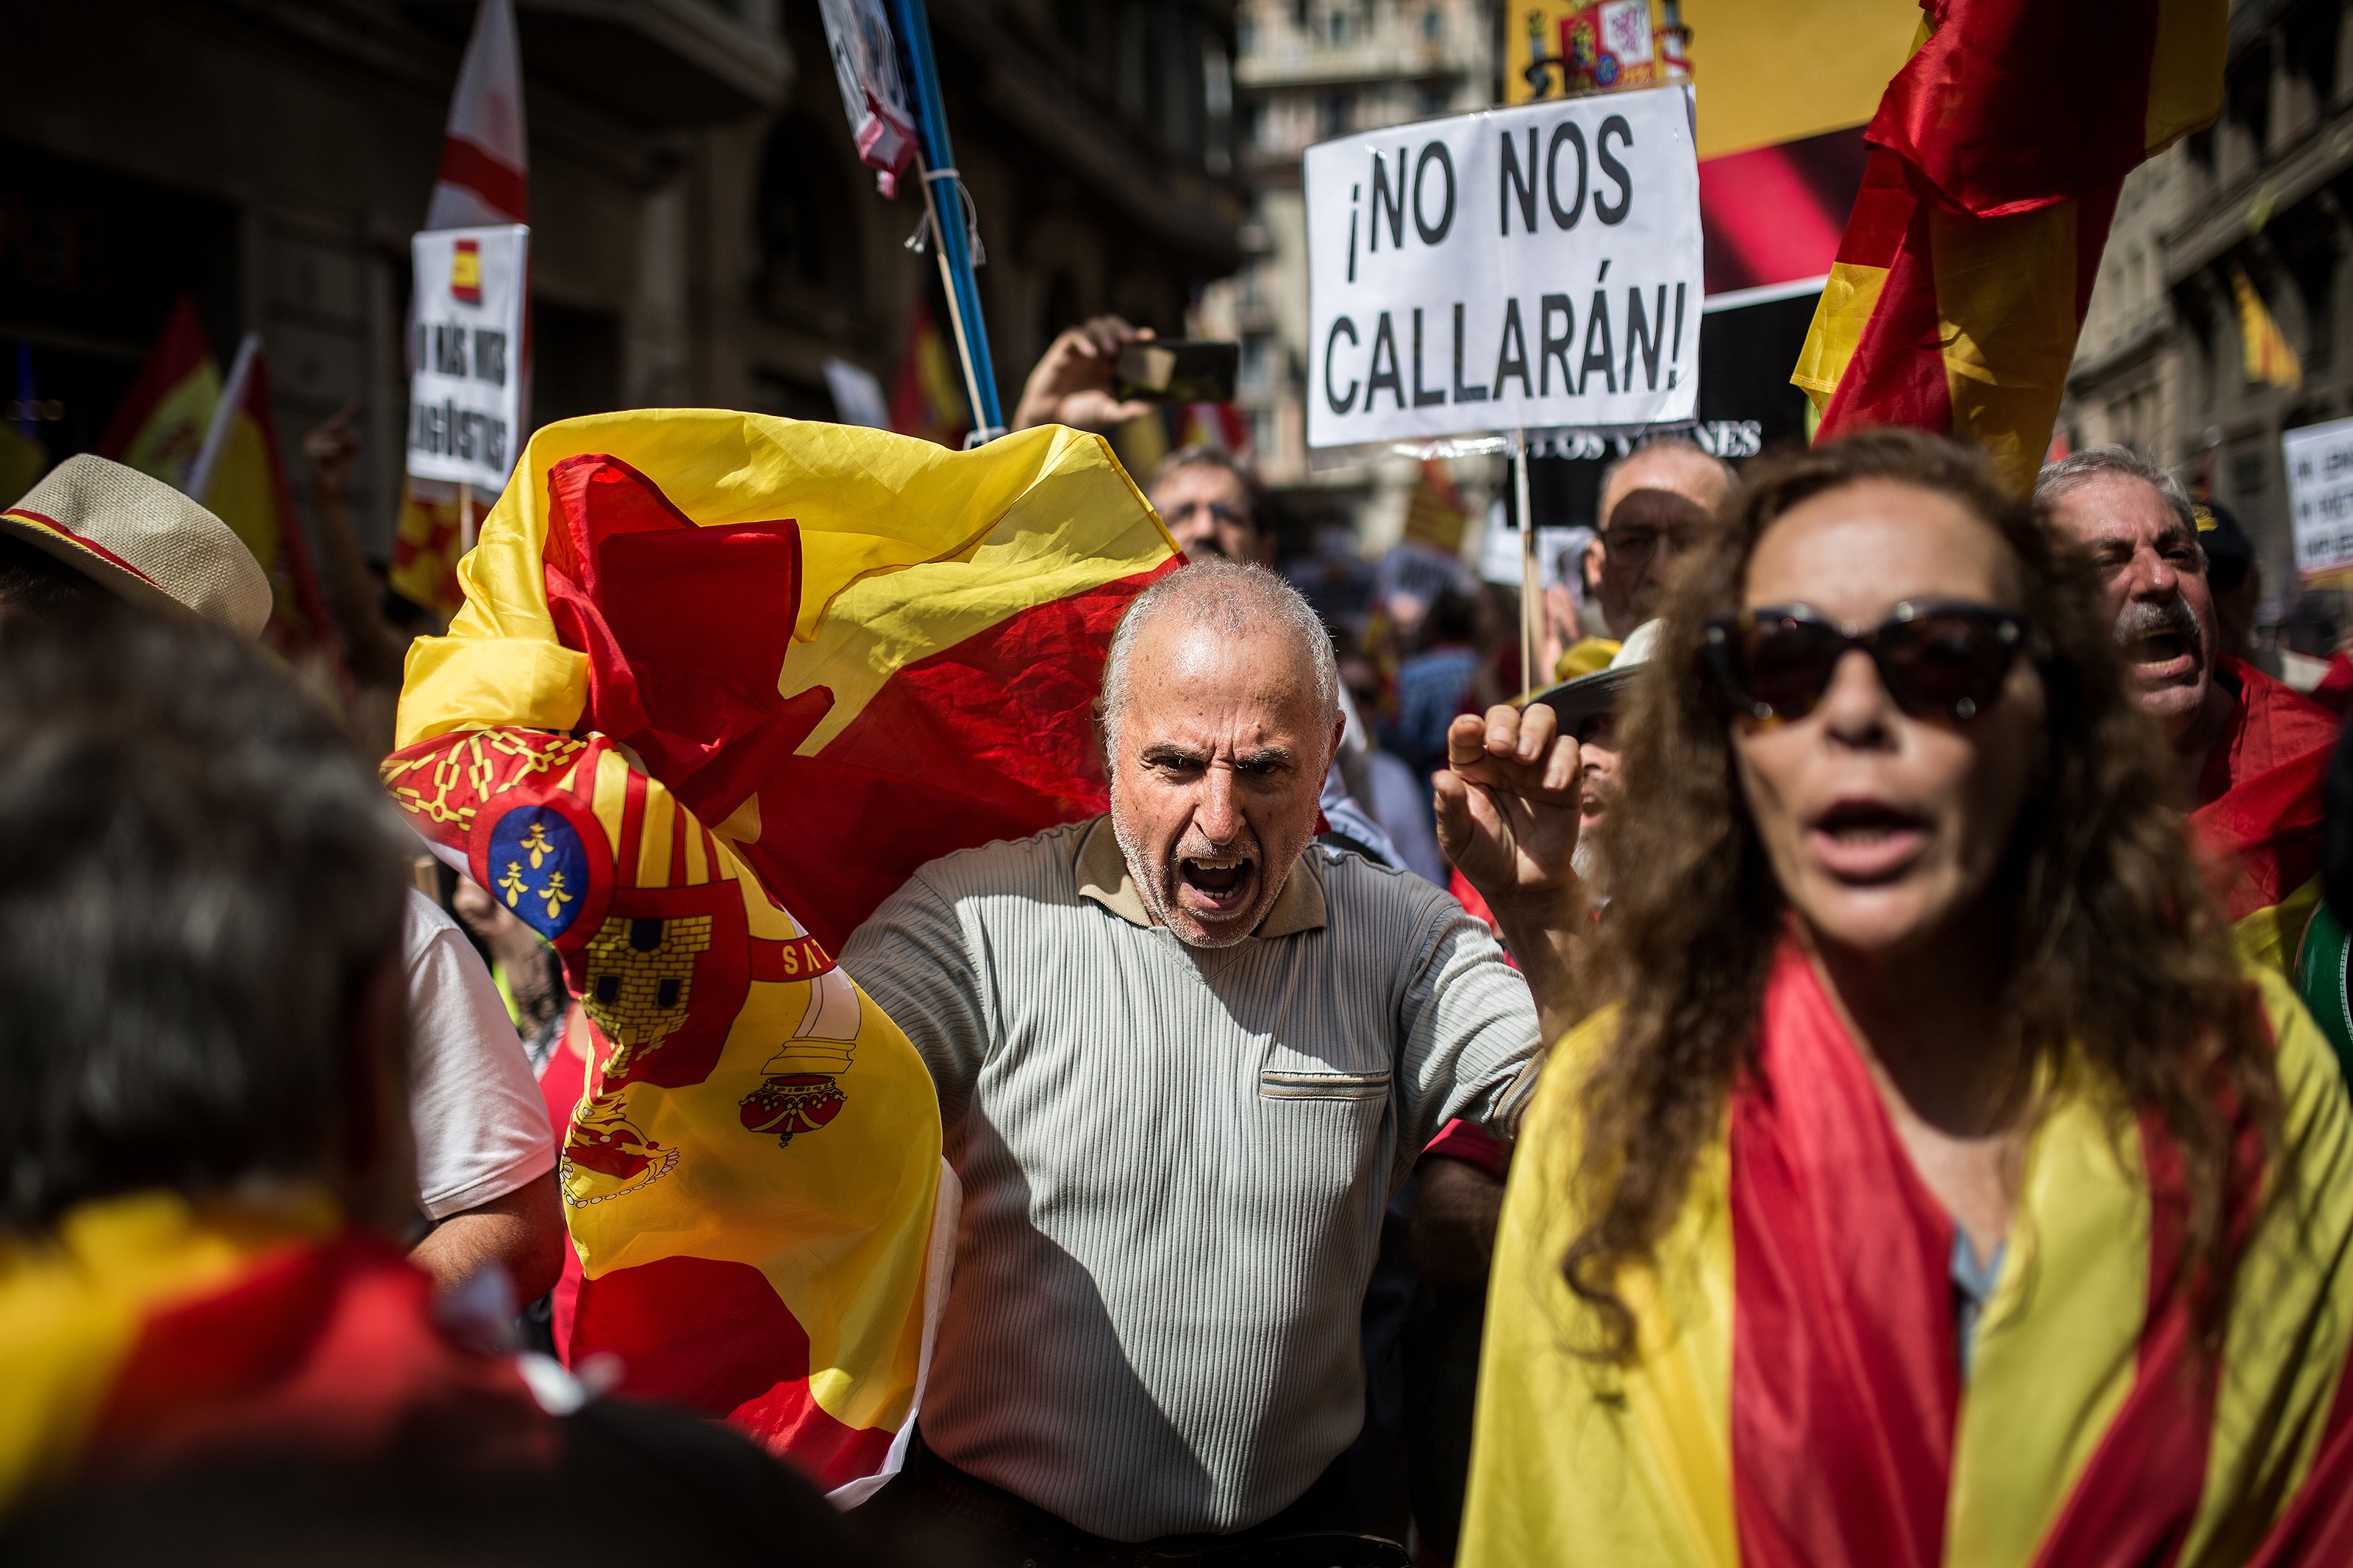 manifestacio espanyolista unionista bandera espanyola via laietana (bona qualitat) - Carles Palacio